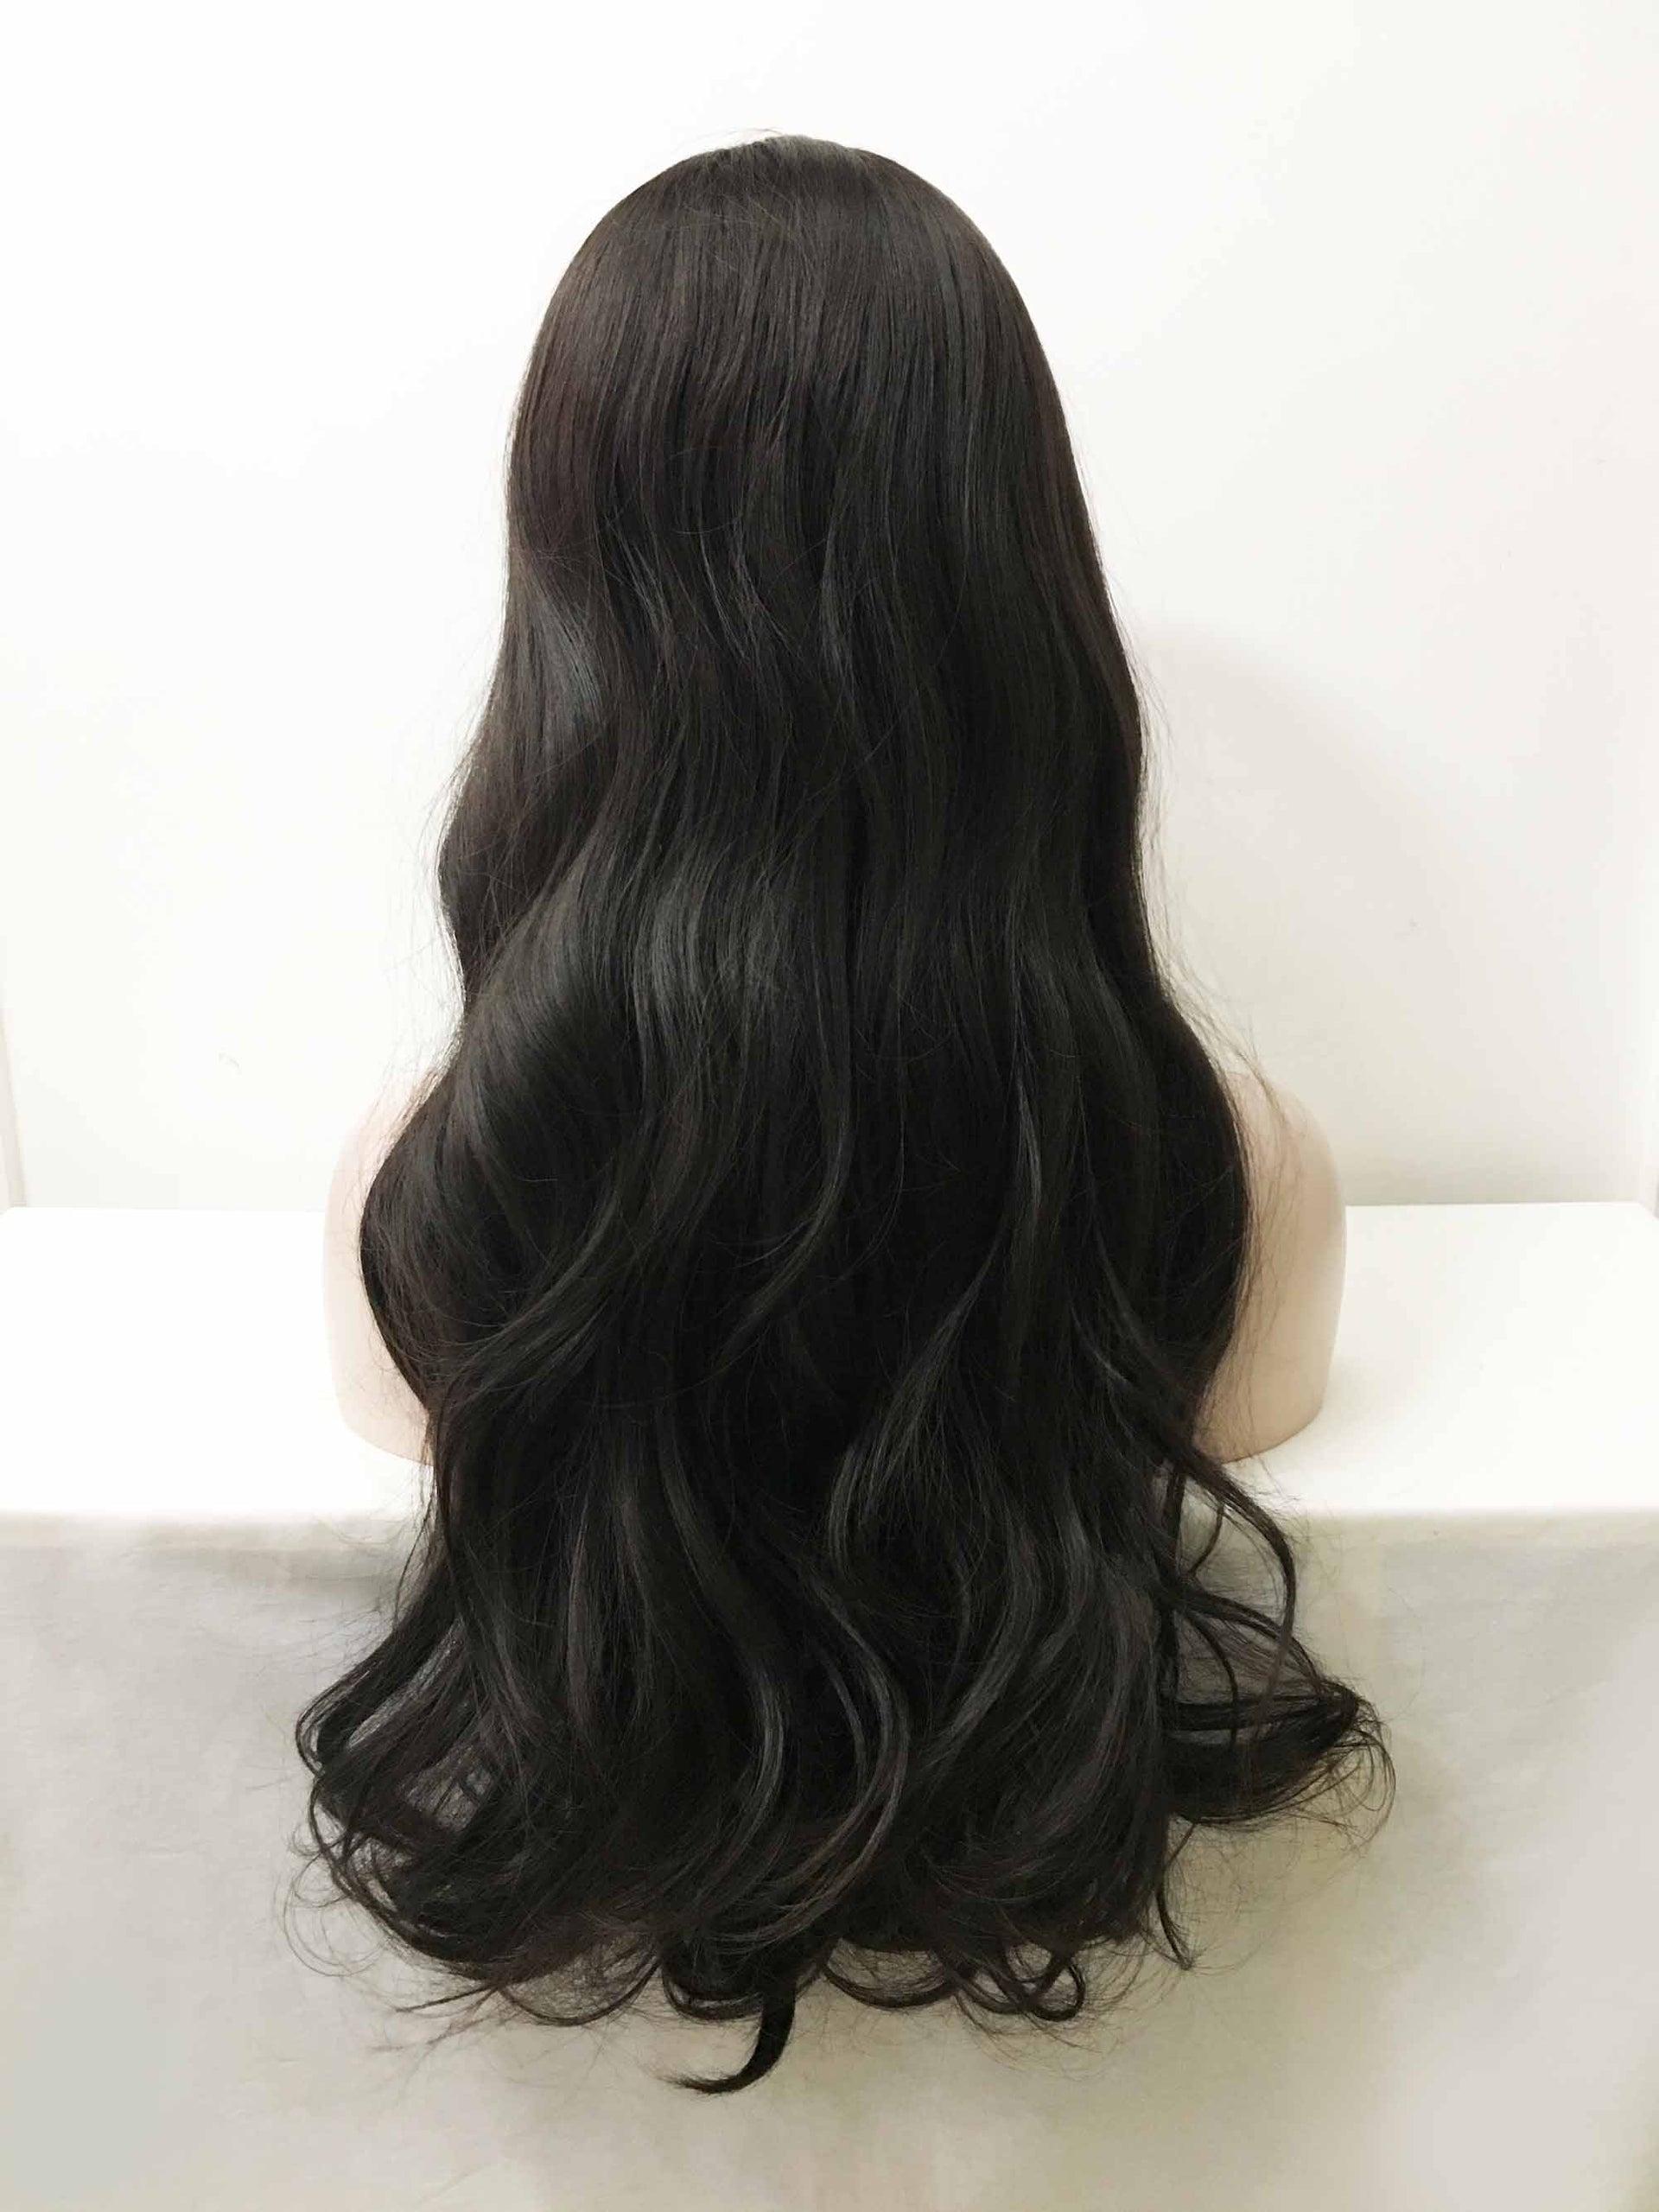 nevermindyrhead Women Natural Black Long Curly Fringe Bangs Wig